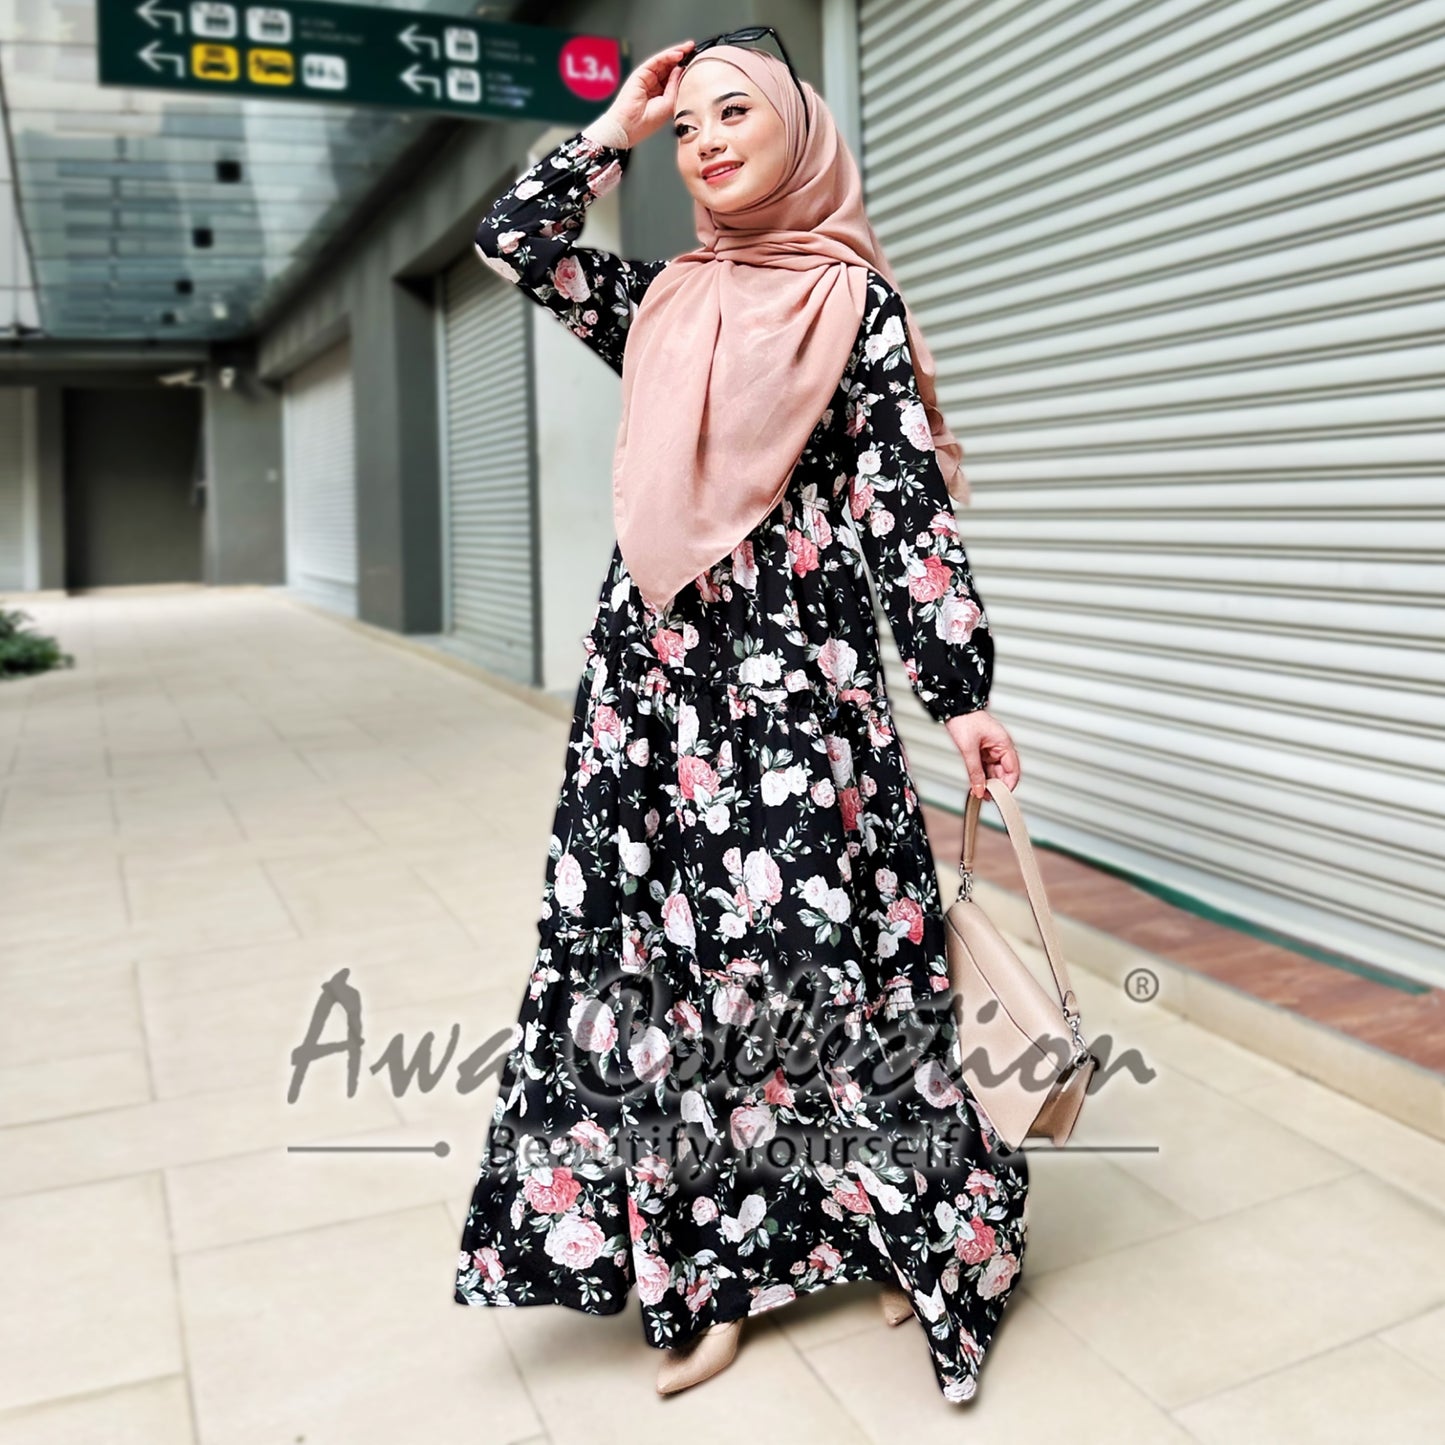 LALEESA Awa Collection DA106154 DRESS RANIA Long Dress Muslimah Dress Women Dress Maxi Dress Baju Raya 2024